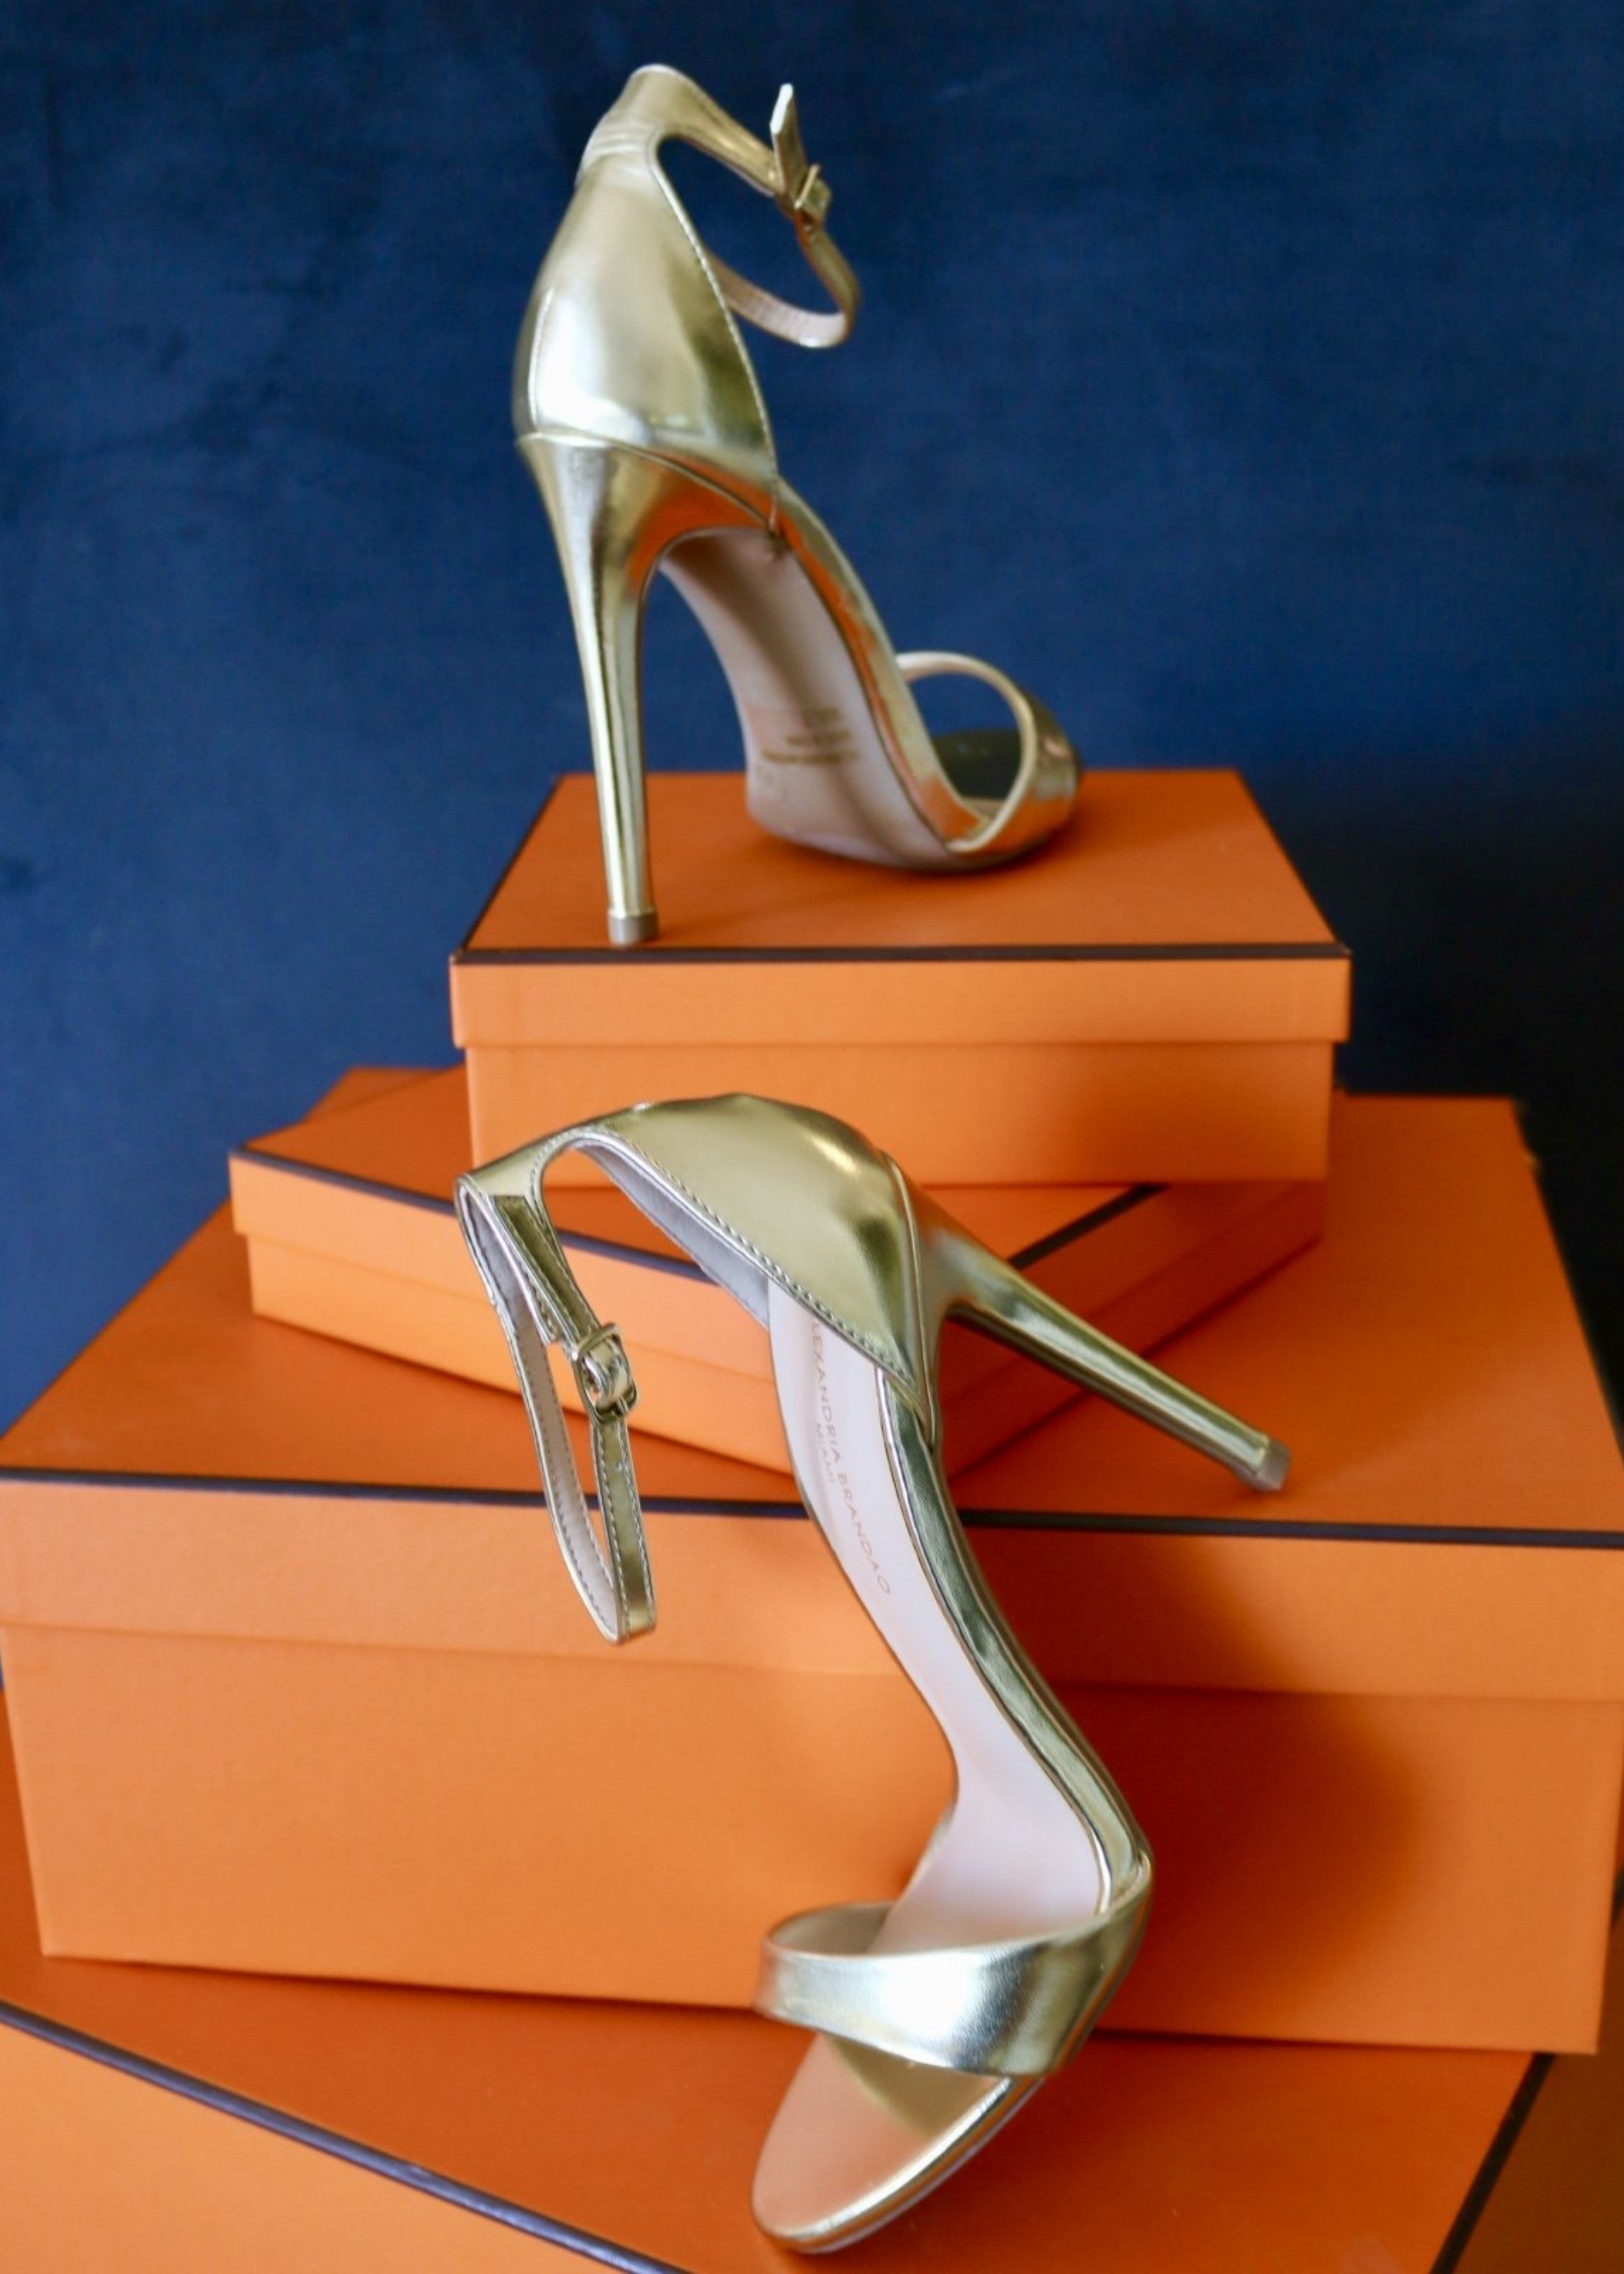 SBYOJLPB Women's Shoes Metal Chain Diamond Shiny Block High Heel Pumps  Ankle Strap Casual Square Toe Sandals Gold 7(39) - Walmart.com